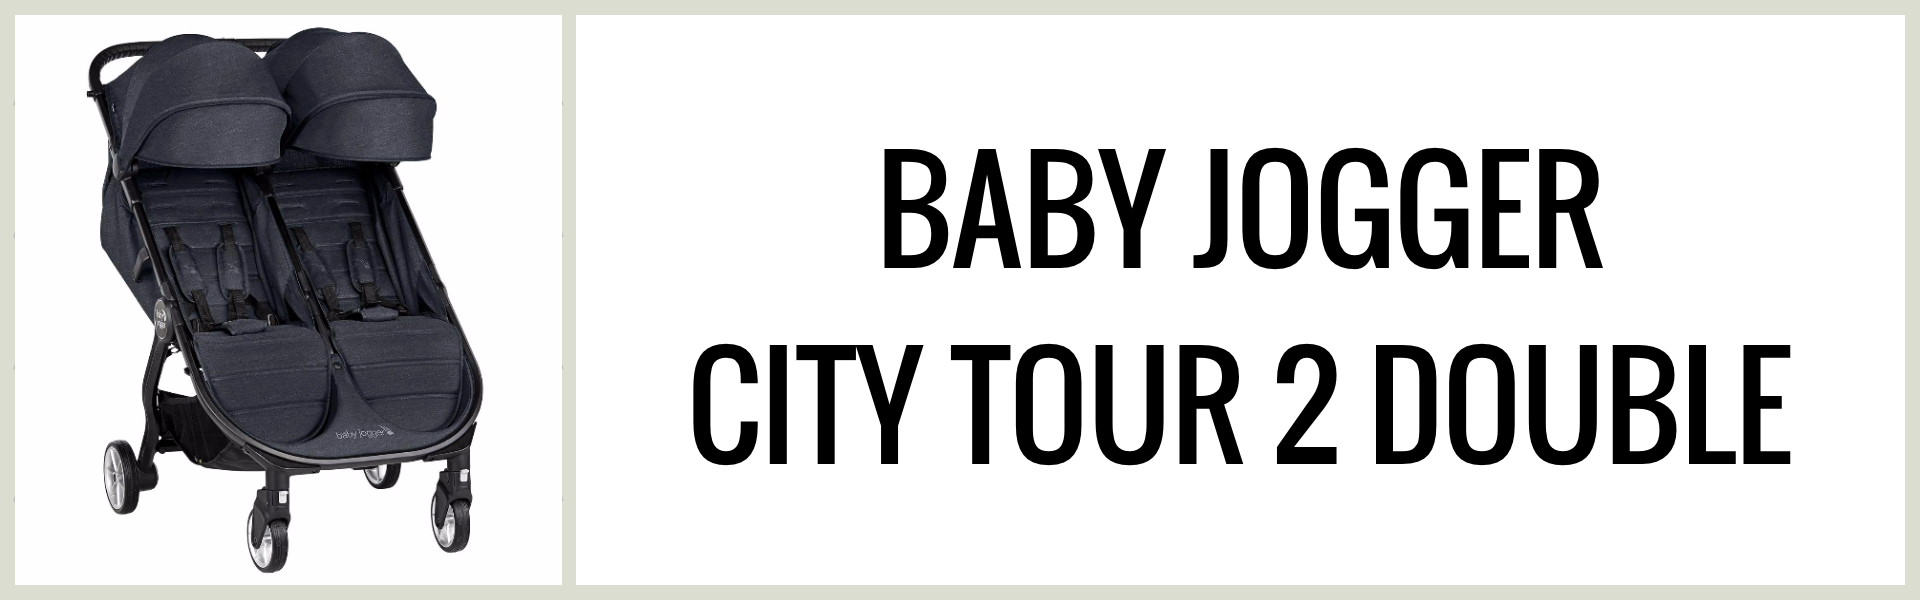 Omdöme: Hur är Baby Jogger City Tour 2 Double som resevagn?